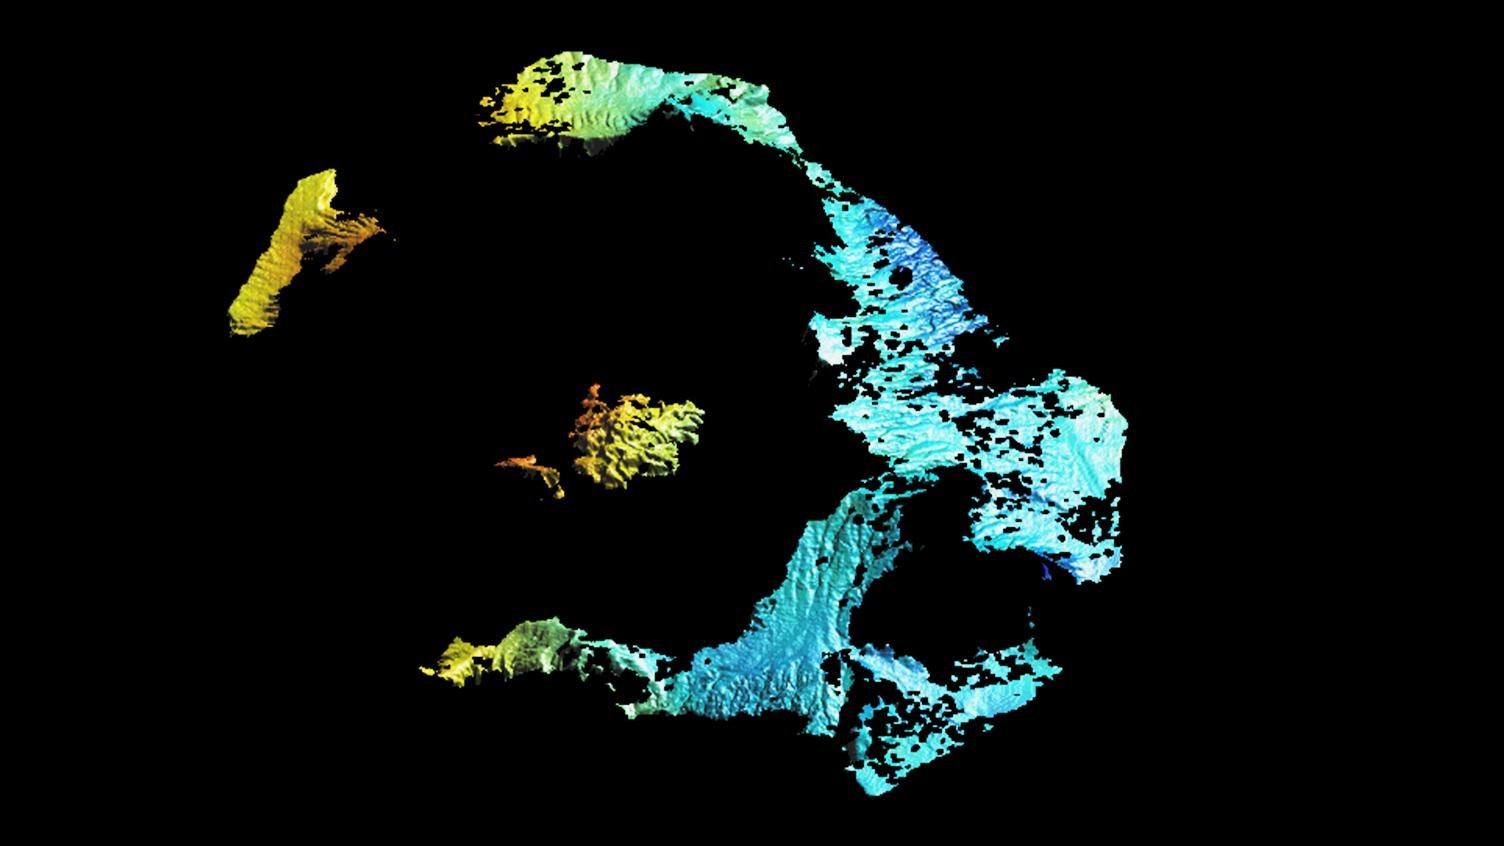 Radar image of the Santorini archipelago